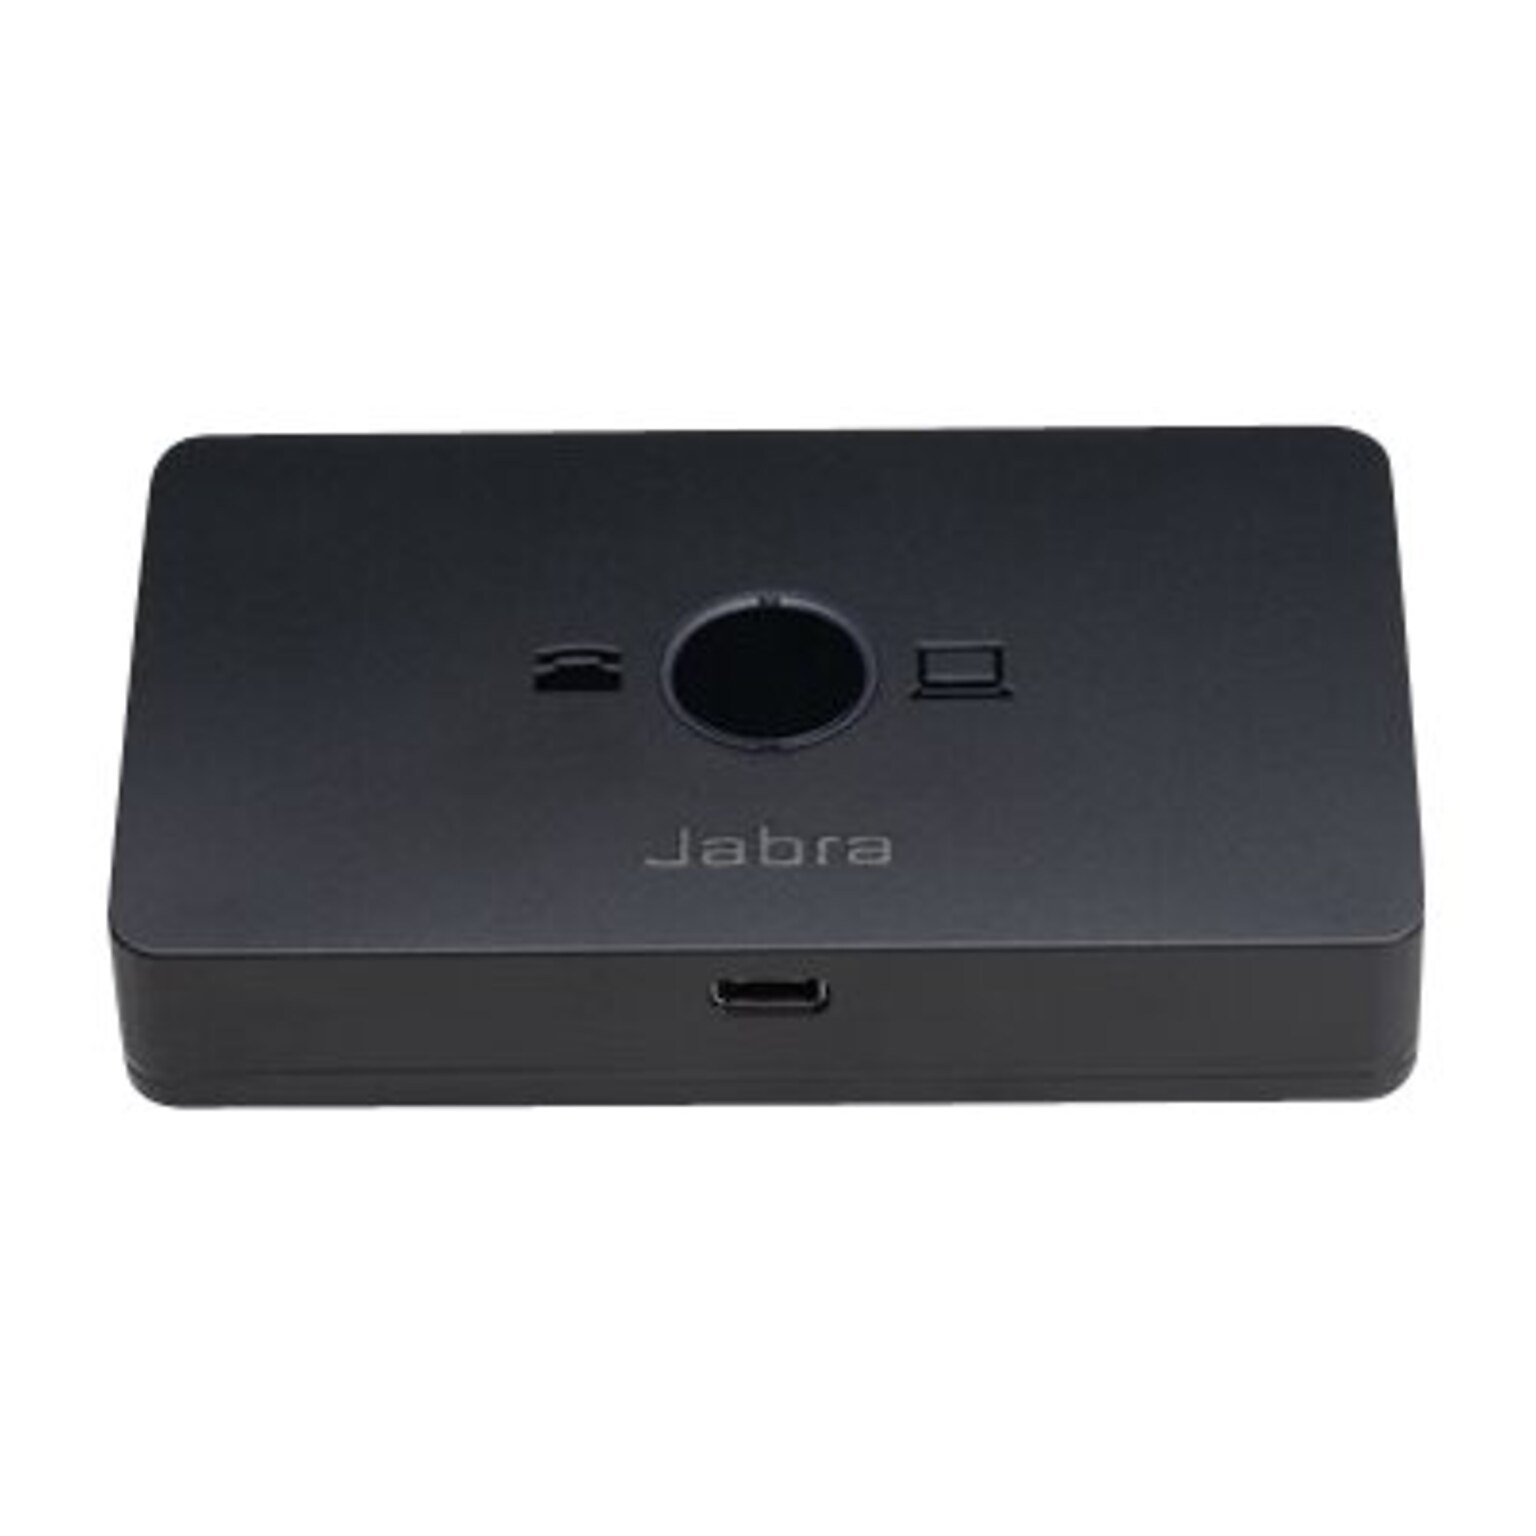 jabra Link 950 USB-C Audio Processors, Black (2950-79)